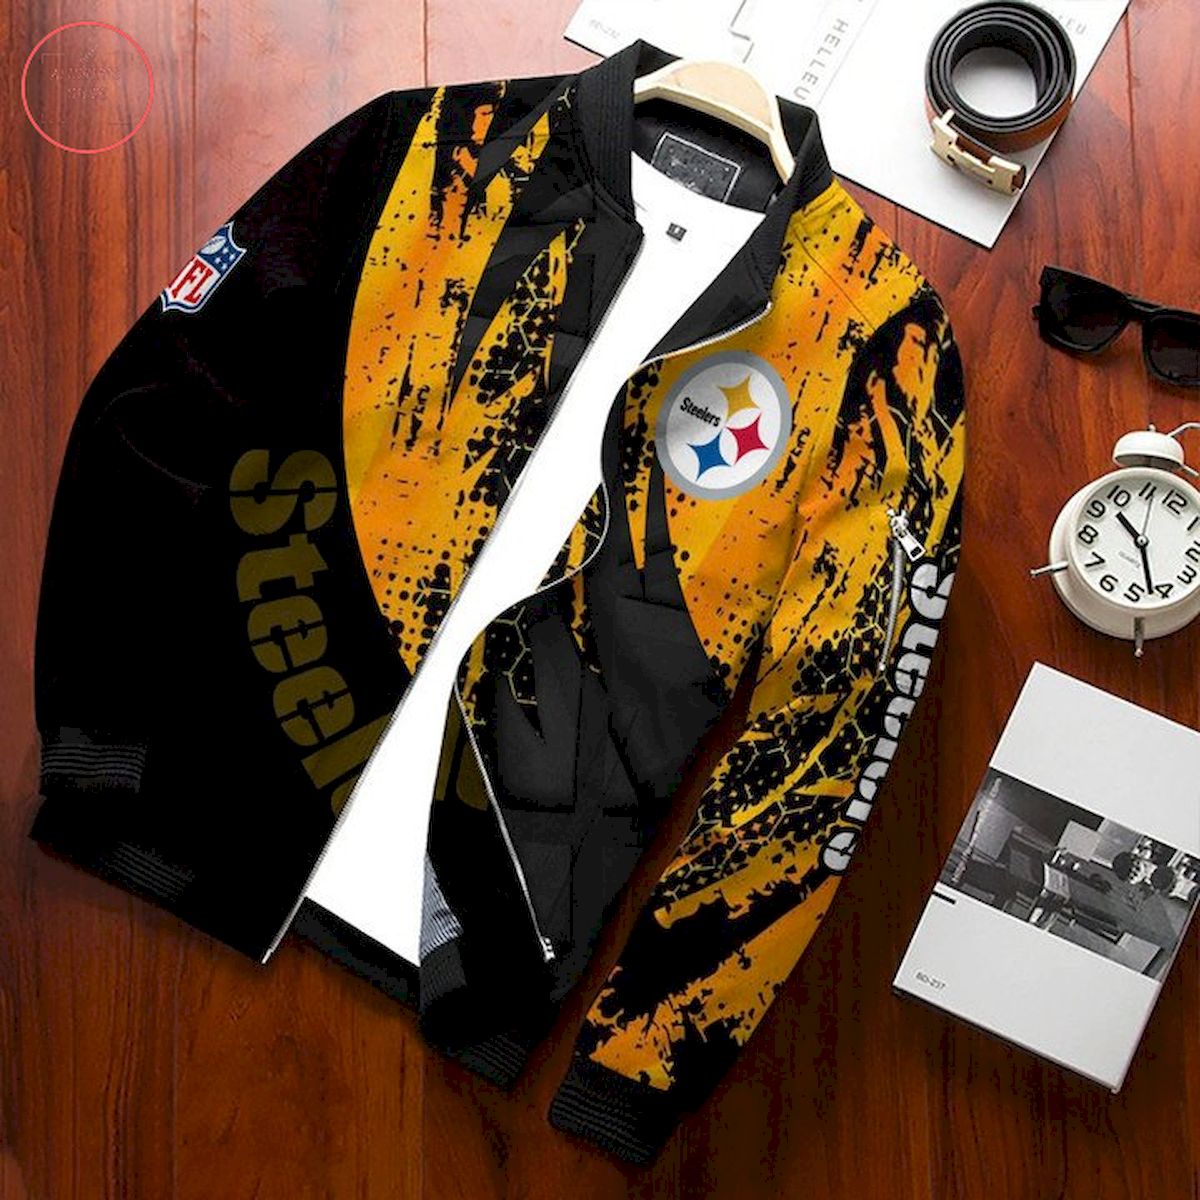 Pittsburgh Steelers NFL Bomber Jacket